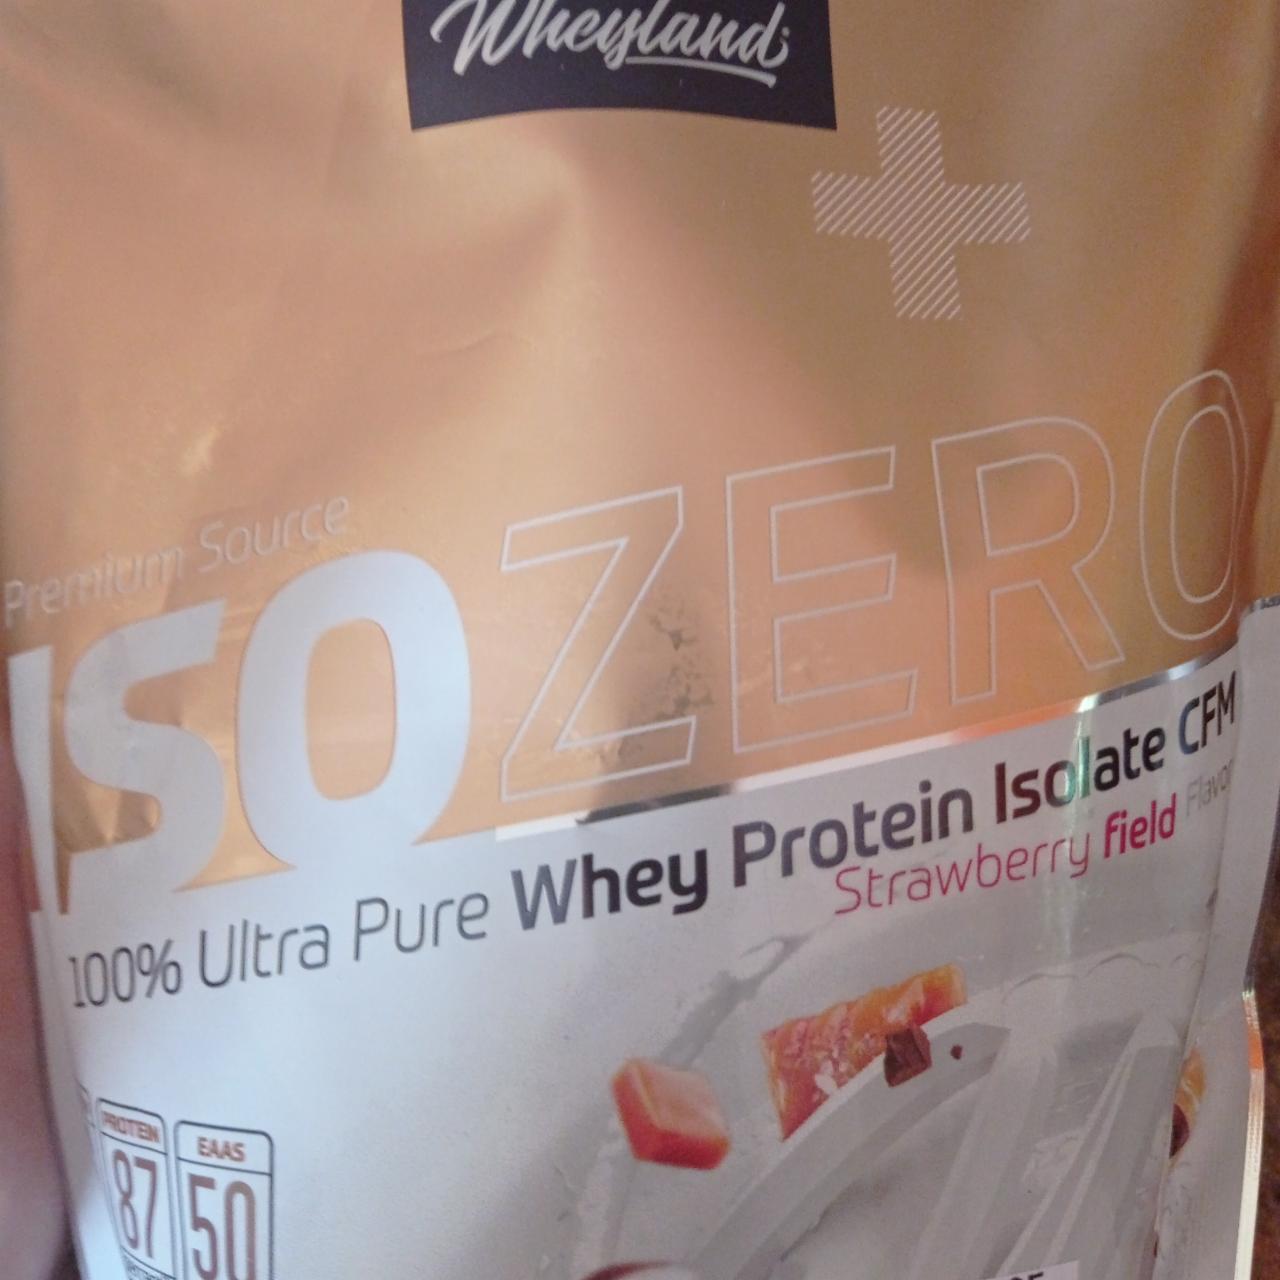 Fotografie - Iso Zero 100% Ultra Pure Whey Protein Isolate CFM Strawberry field Wheyland